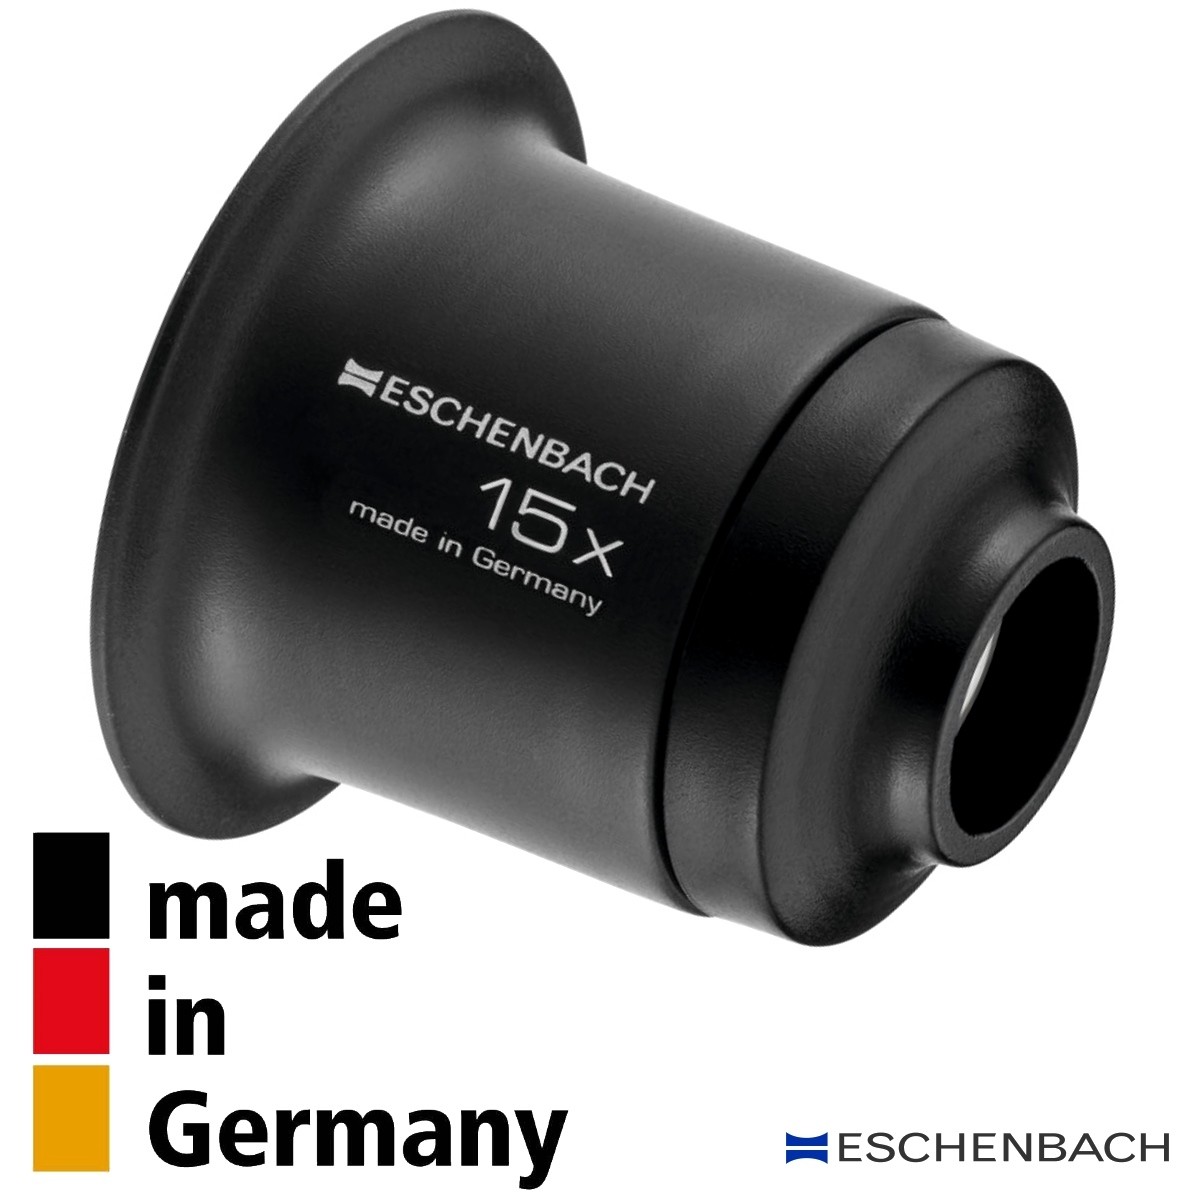 Eschenbach 15x Loupe Magnifier